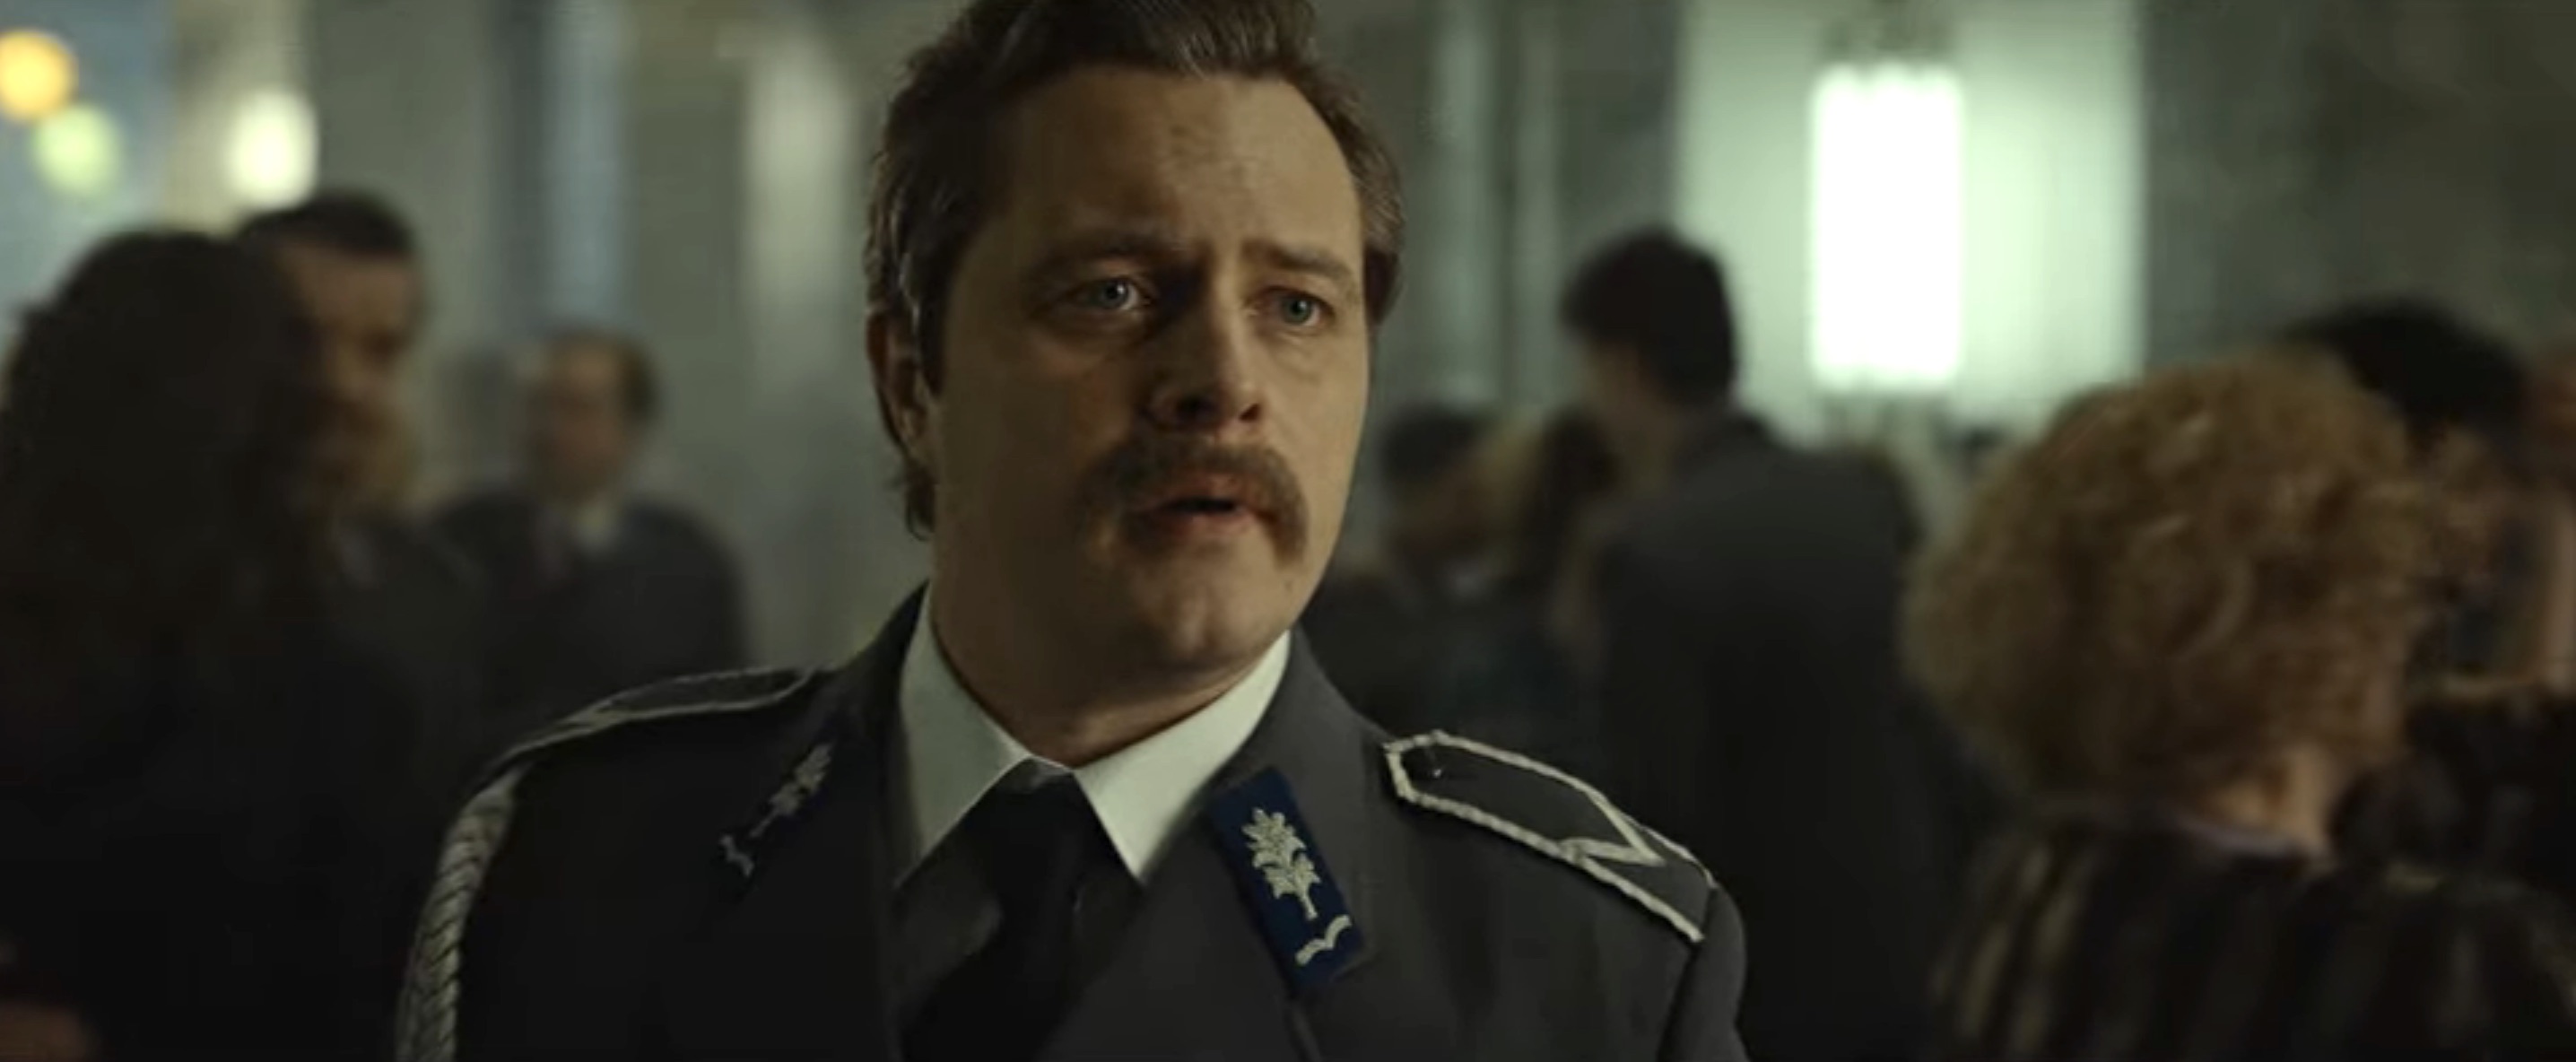 Operation Hyacinth Cast (Hiacynt) - Tomasz Schuchardt as Wojtek